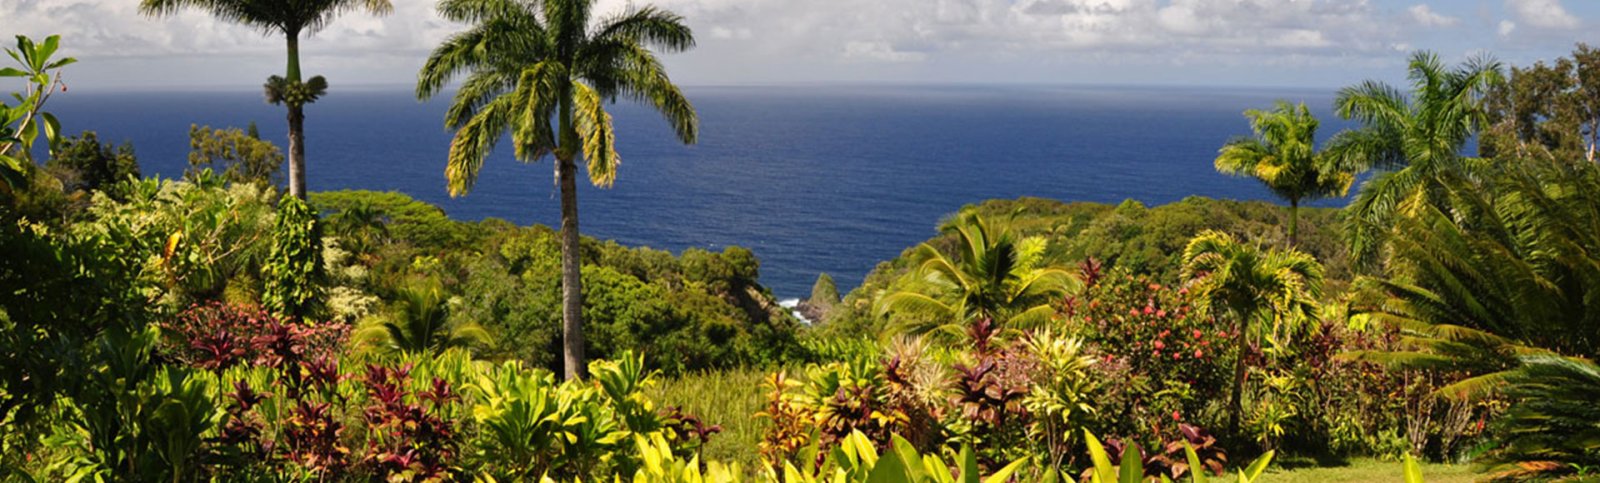 Garden of Eden - East Maui